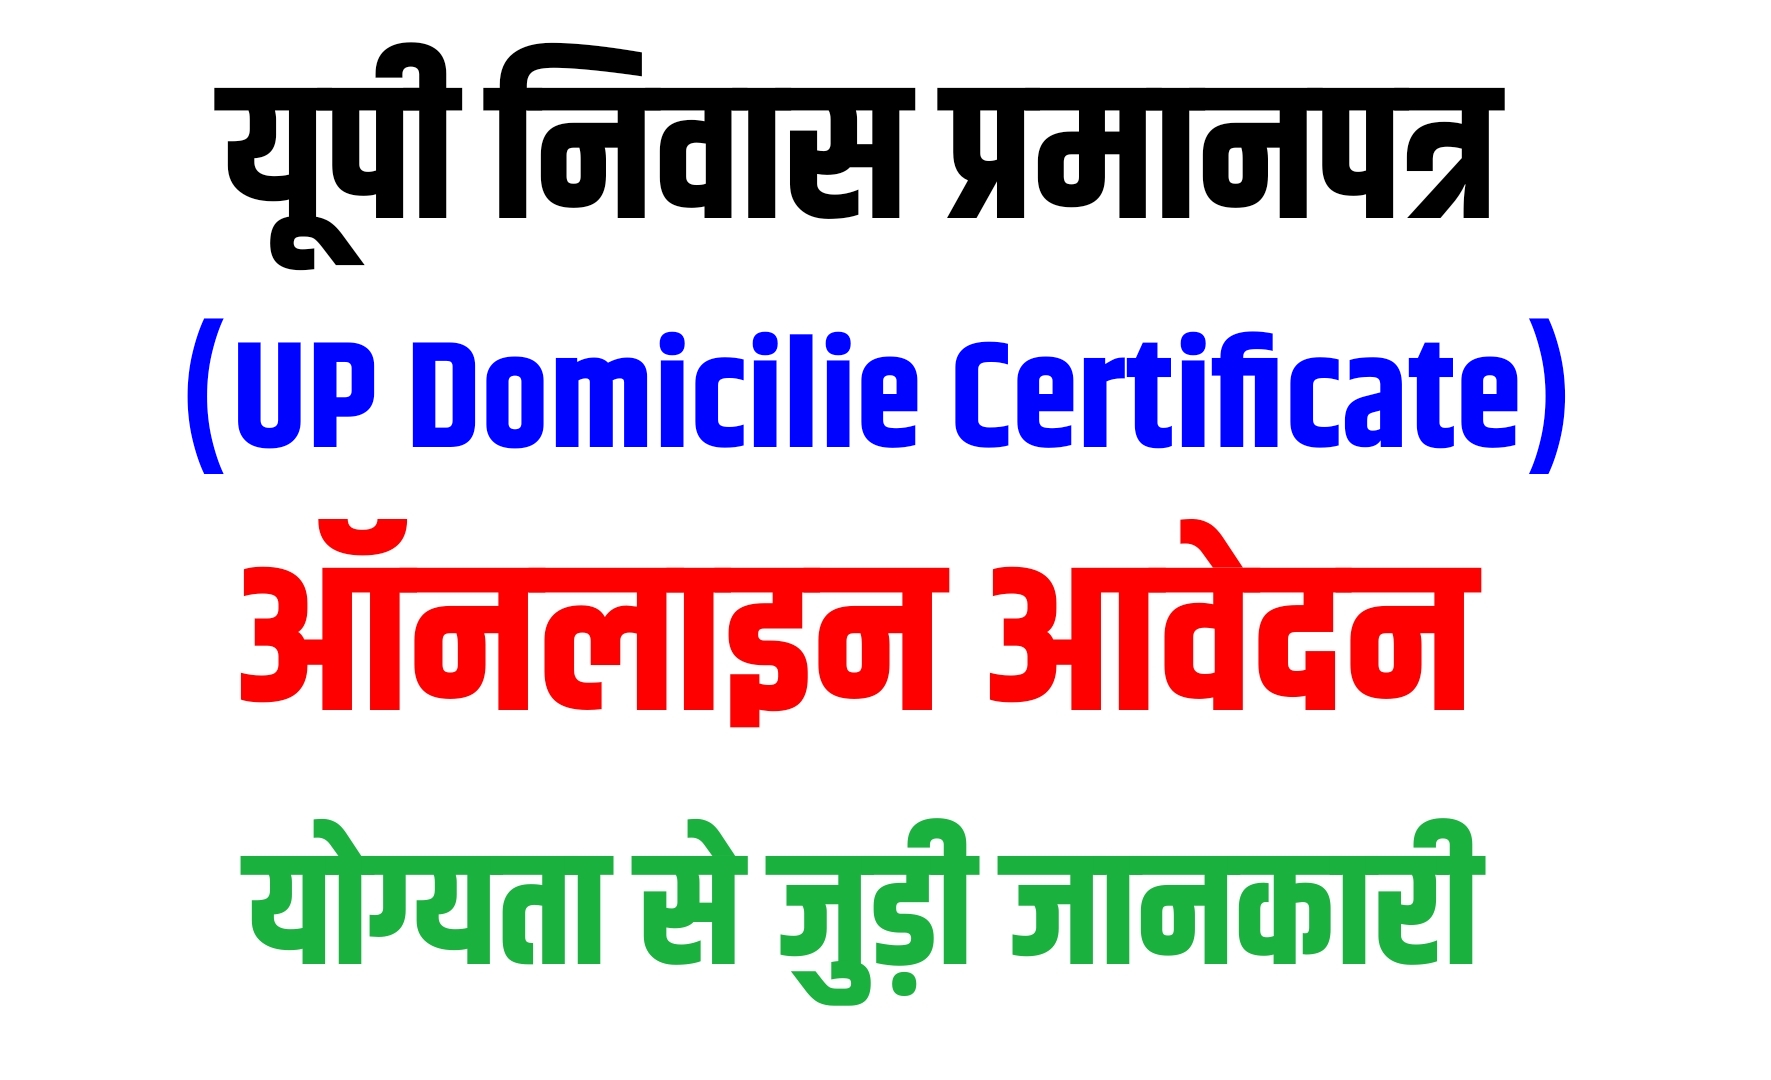 UP Domicilie Certificate